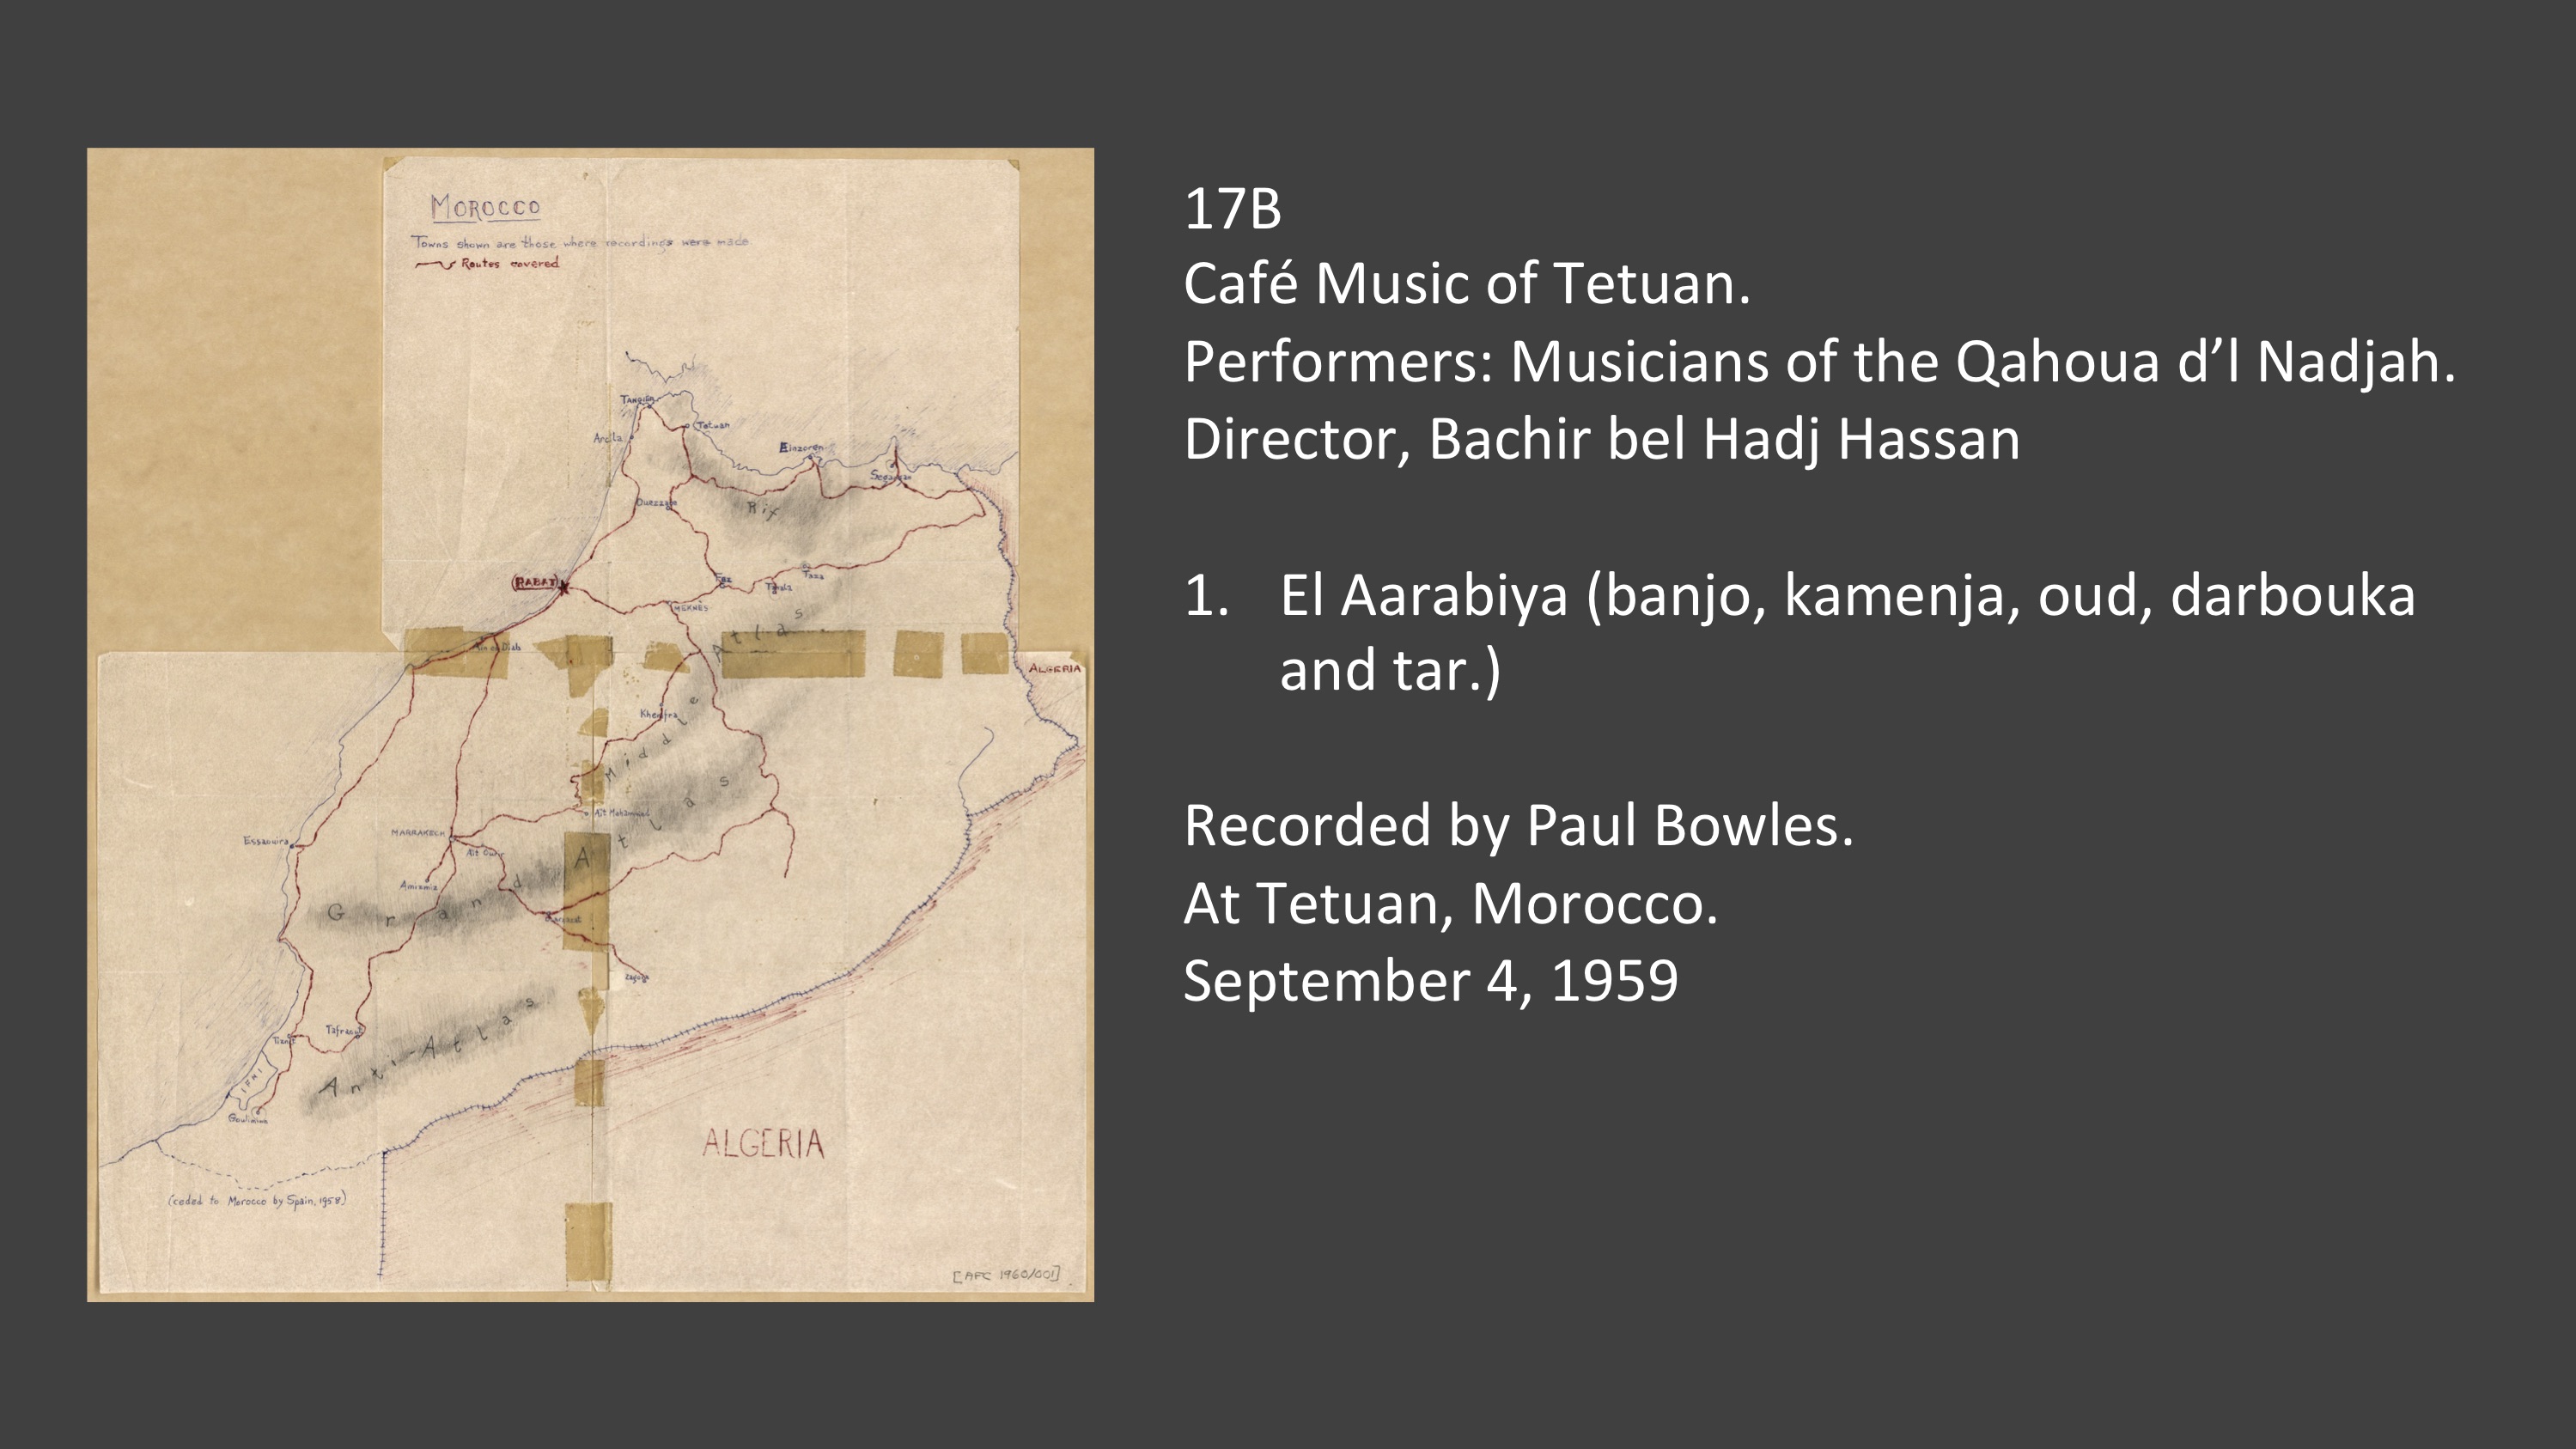  Musicians of the Qahoua d’l Nadjah - 17B 1. Cafe Music of Tetuan. El Aarabiya 
(banjo, kamenja, oud, darbouka and tar.)

Performers: Musicians of the Qahoua d’l Nadjah. 
Director, Bachir bel Hadj Hassan.